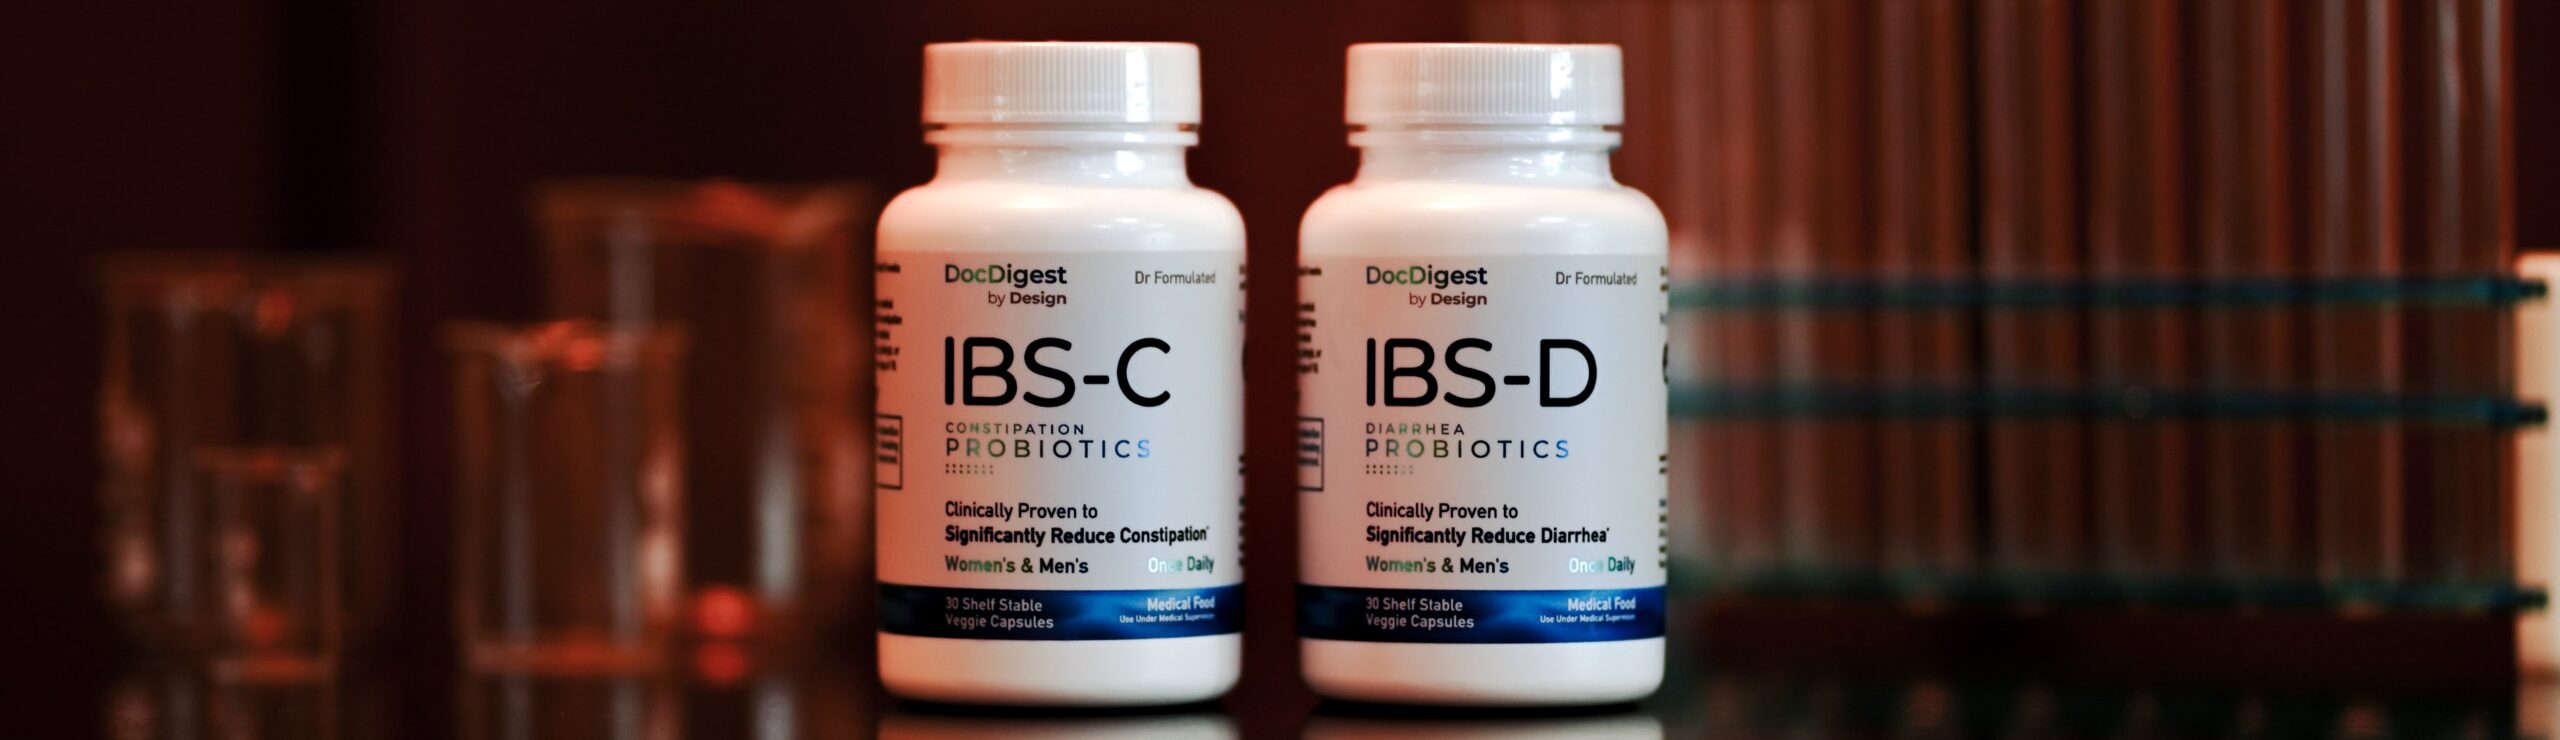 Constipation and Diarrhea Probiotics for IBS-C & IBS-D